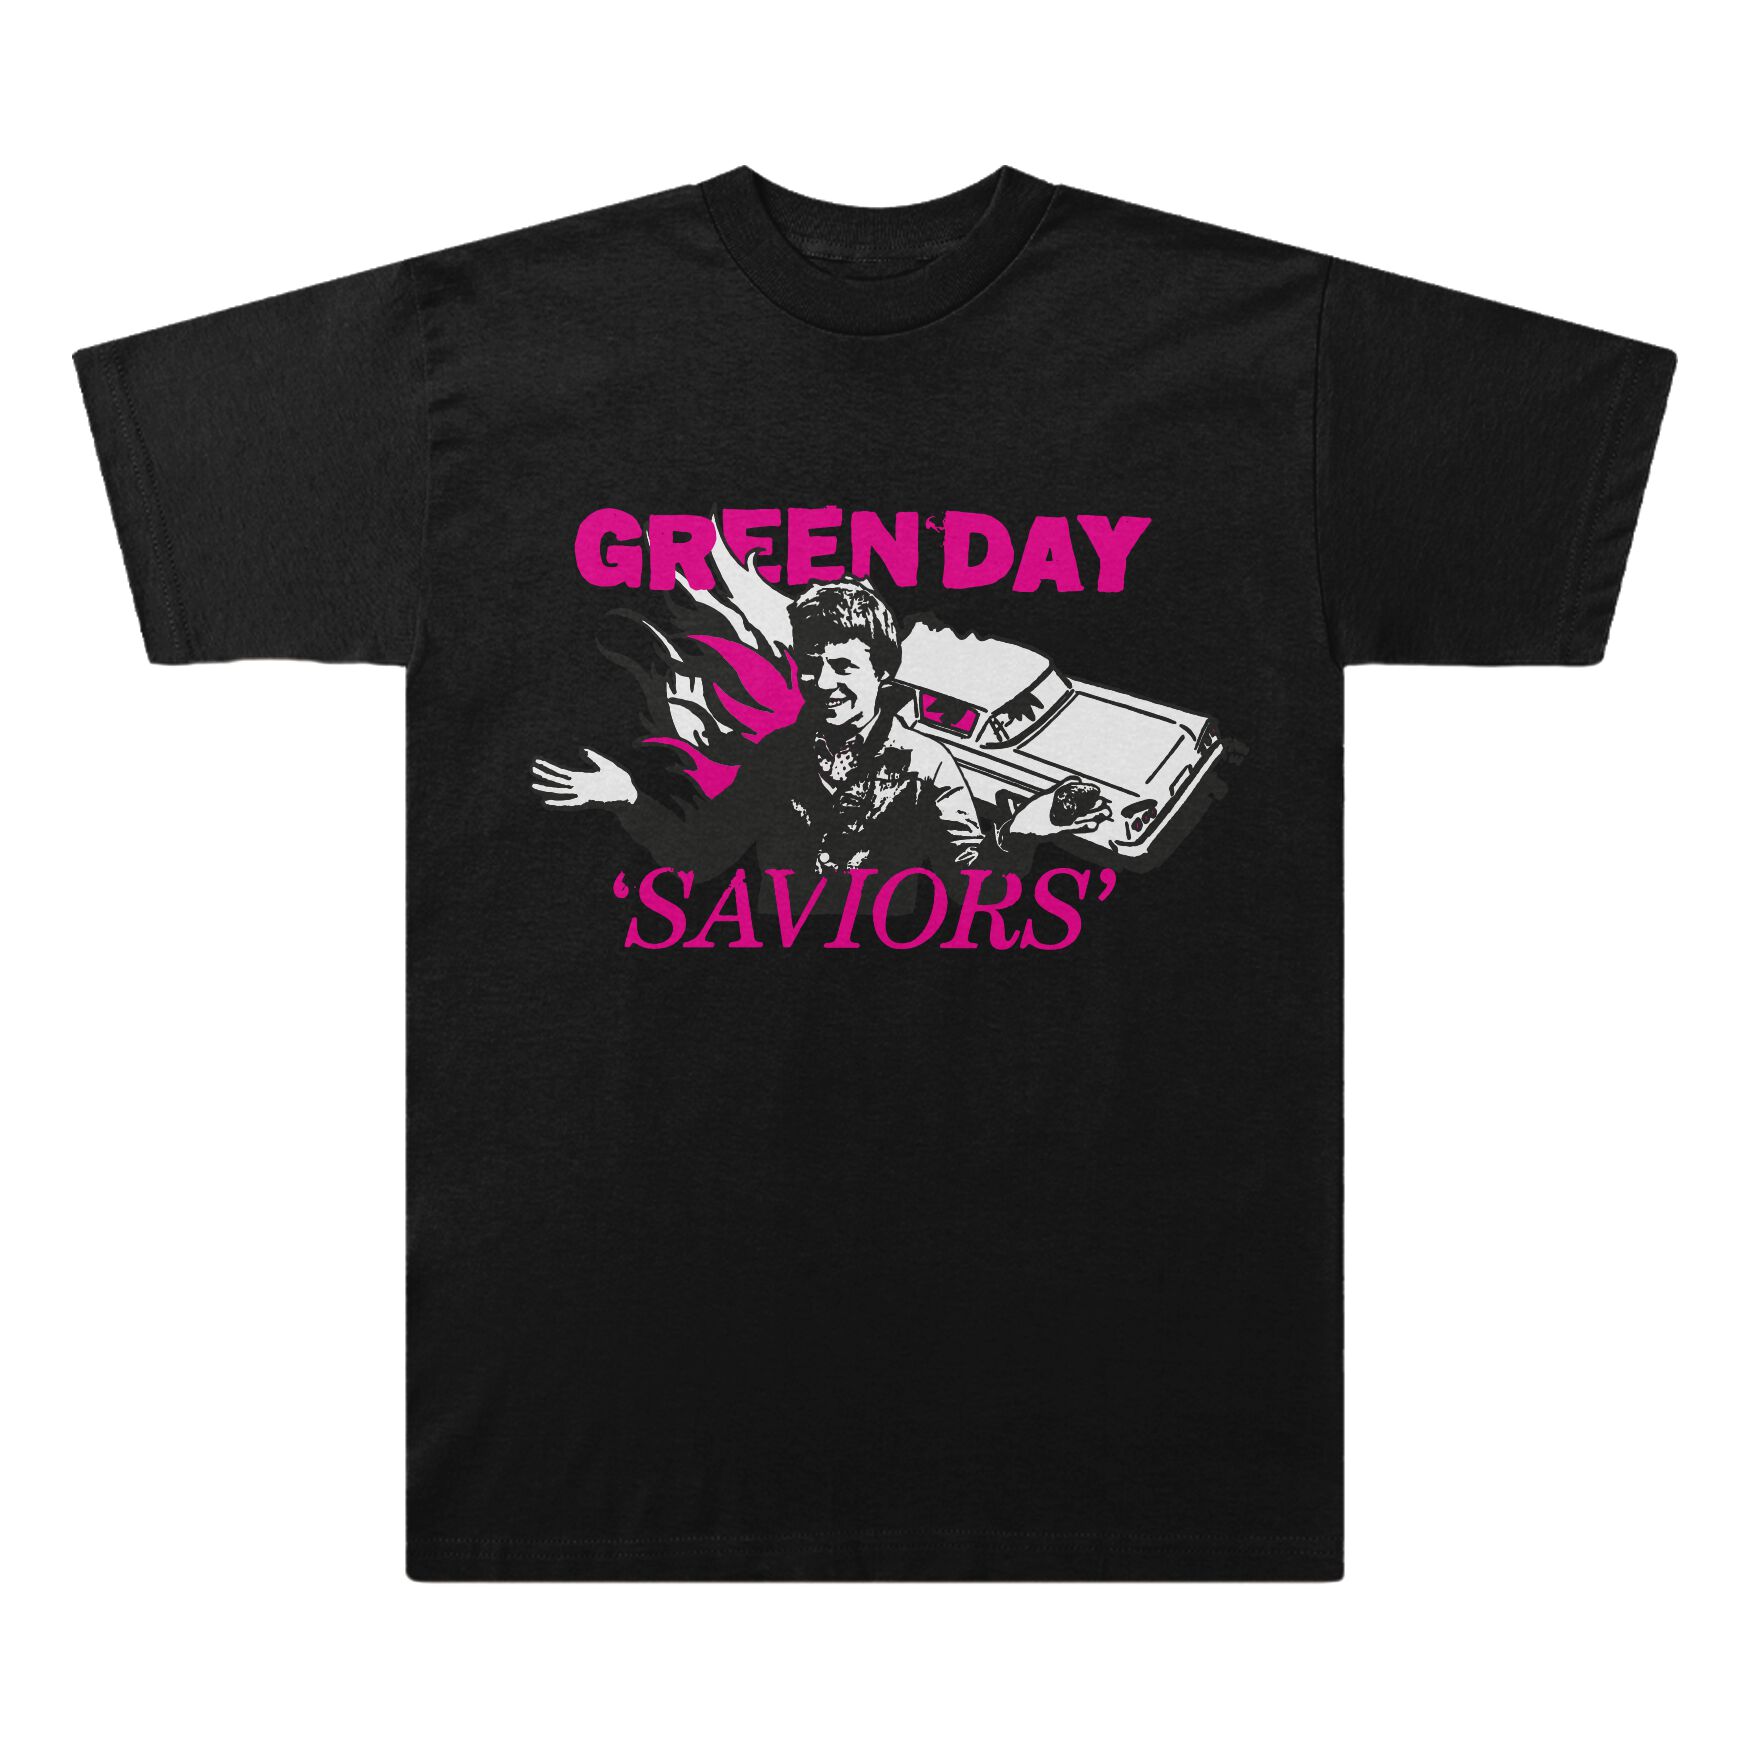 Green Day Saviors Illustration T-Shirt schwarz in XL